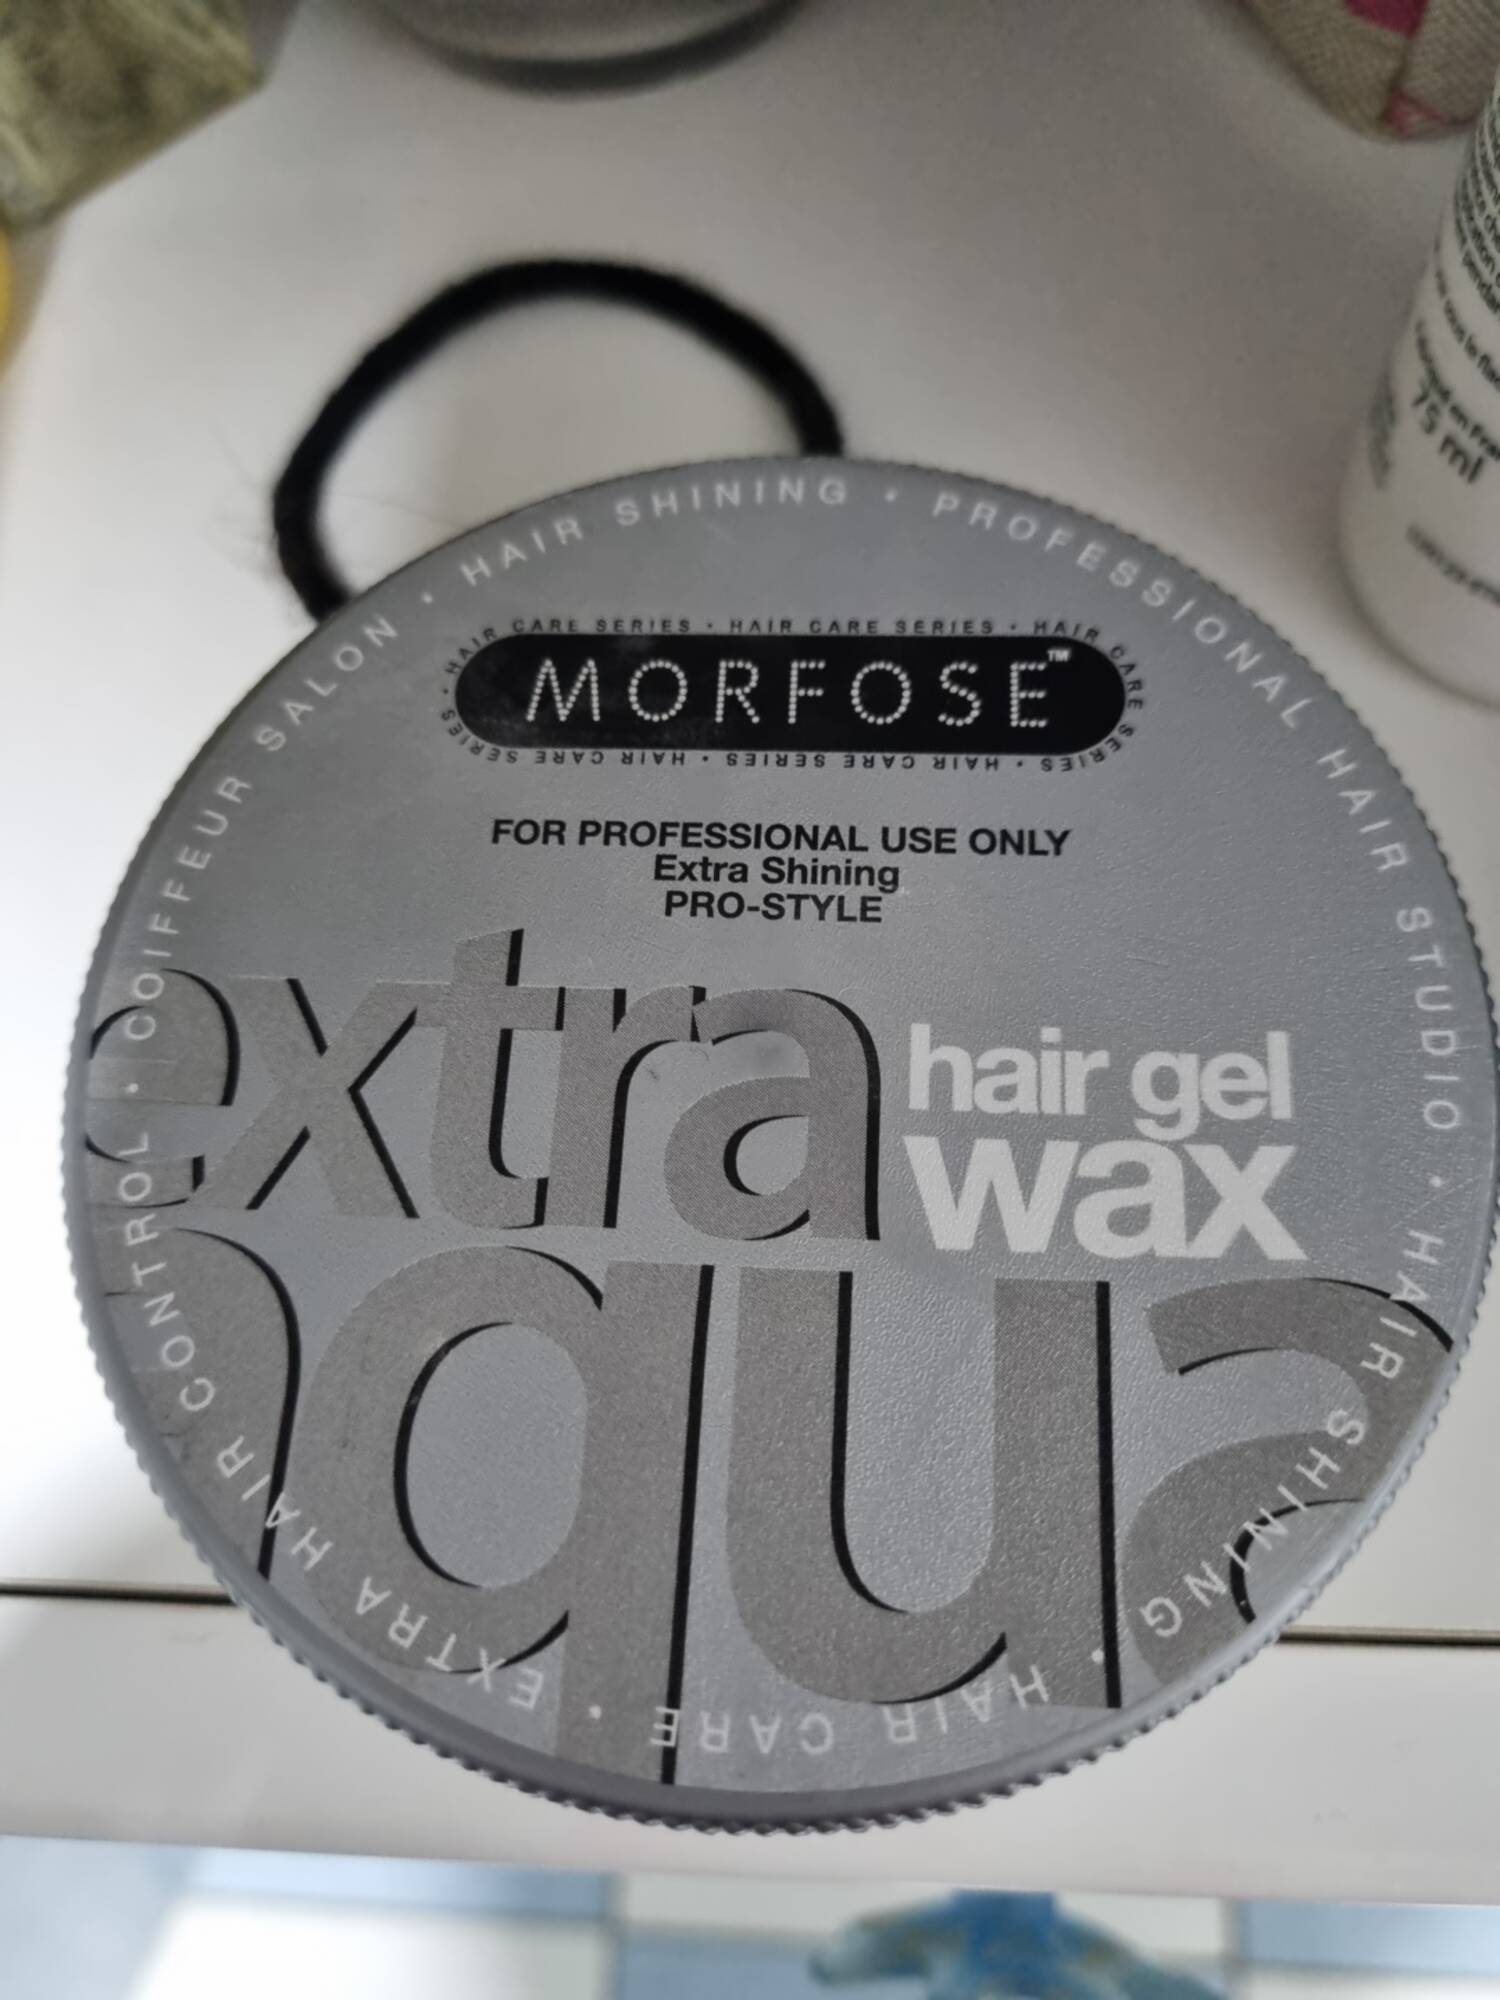 MORFOSE - Extra aqua - Haïr gel wax